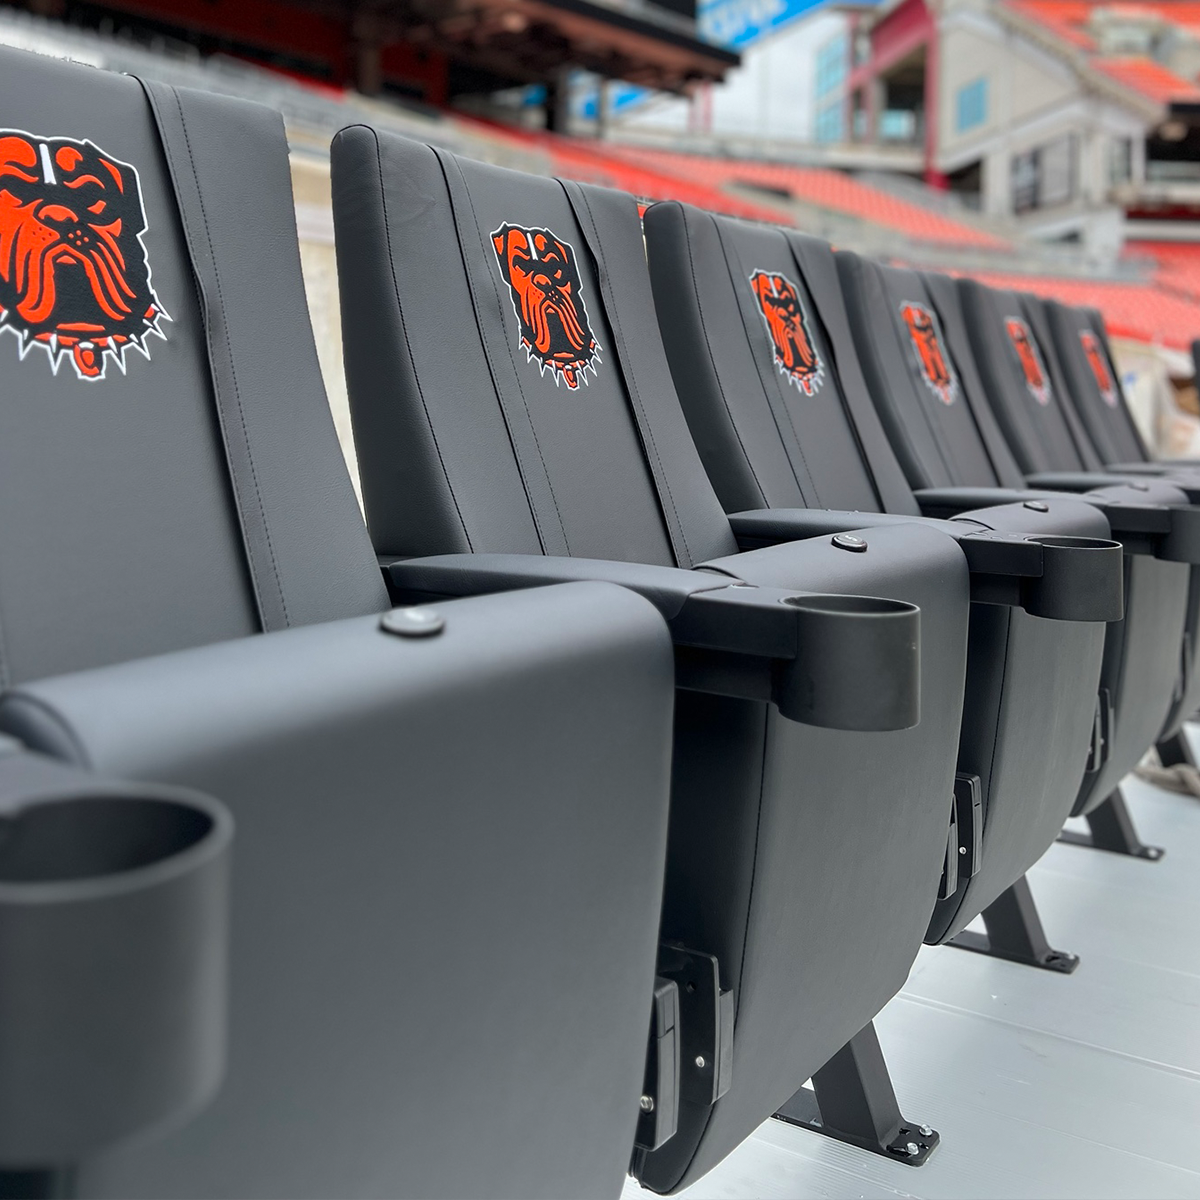 SuiteMax 3.5 VIP Seats with Toronto Raptors Primary Red Logo